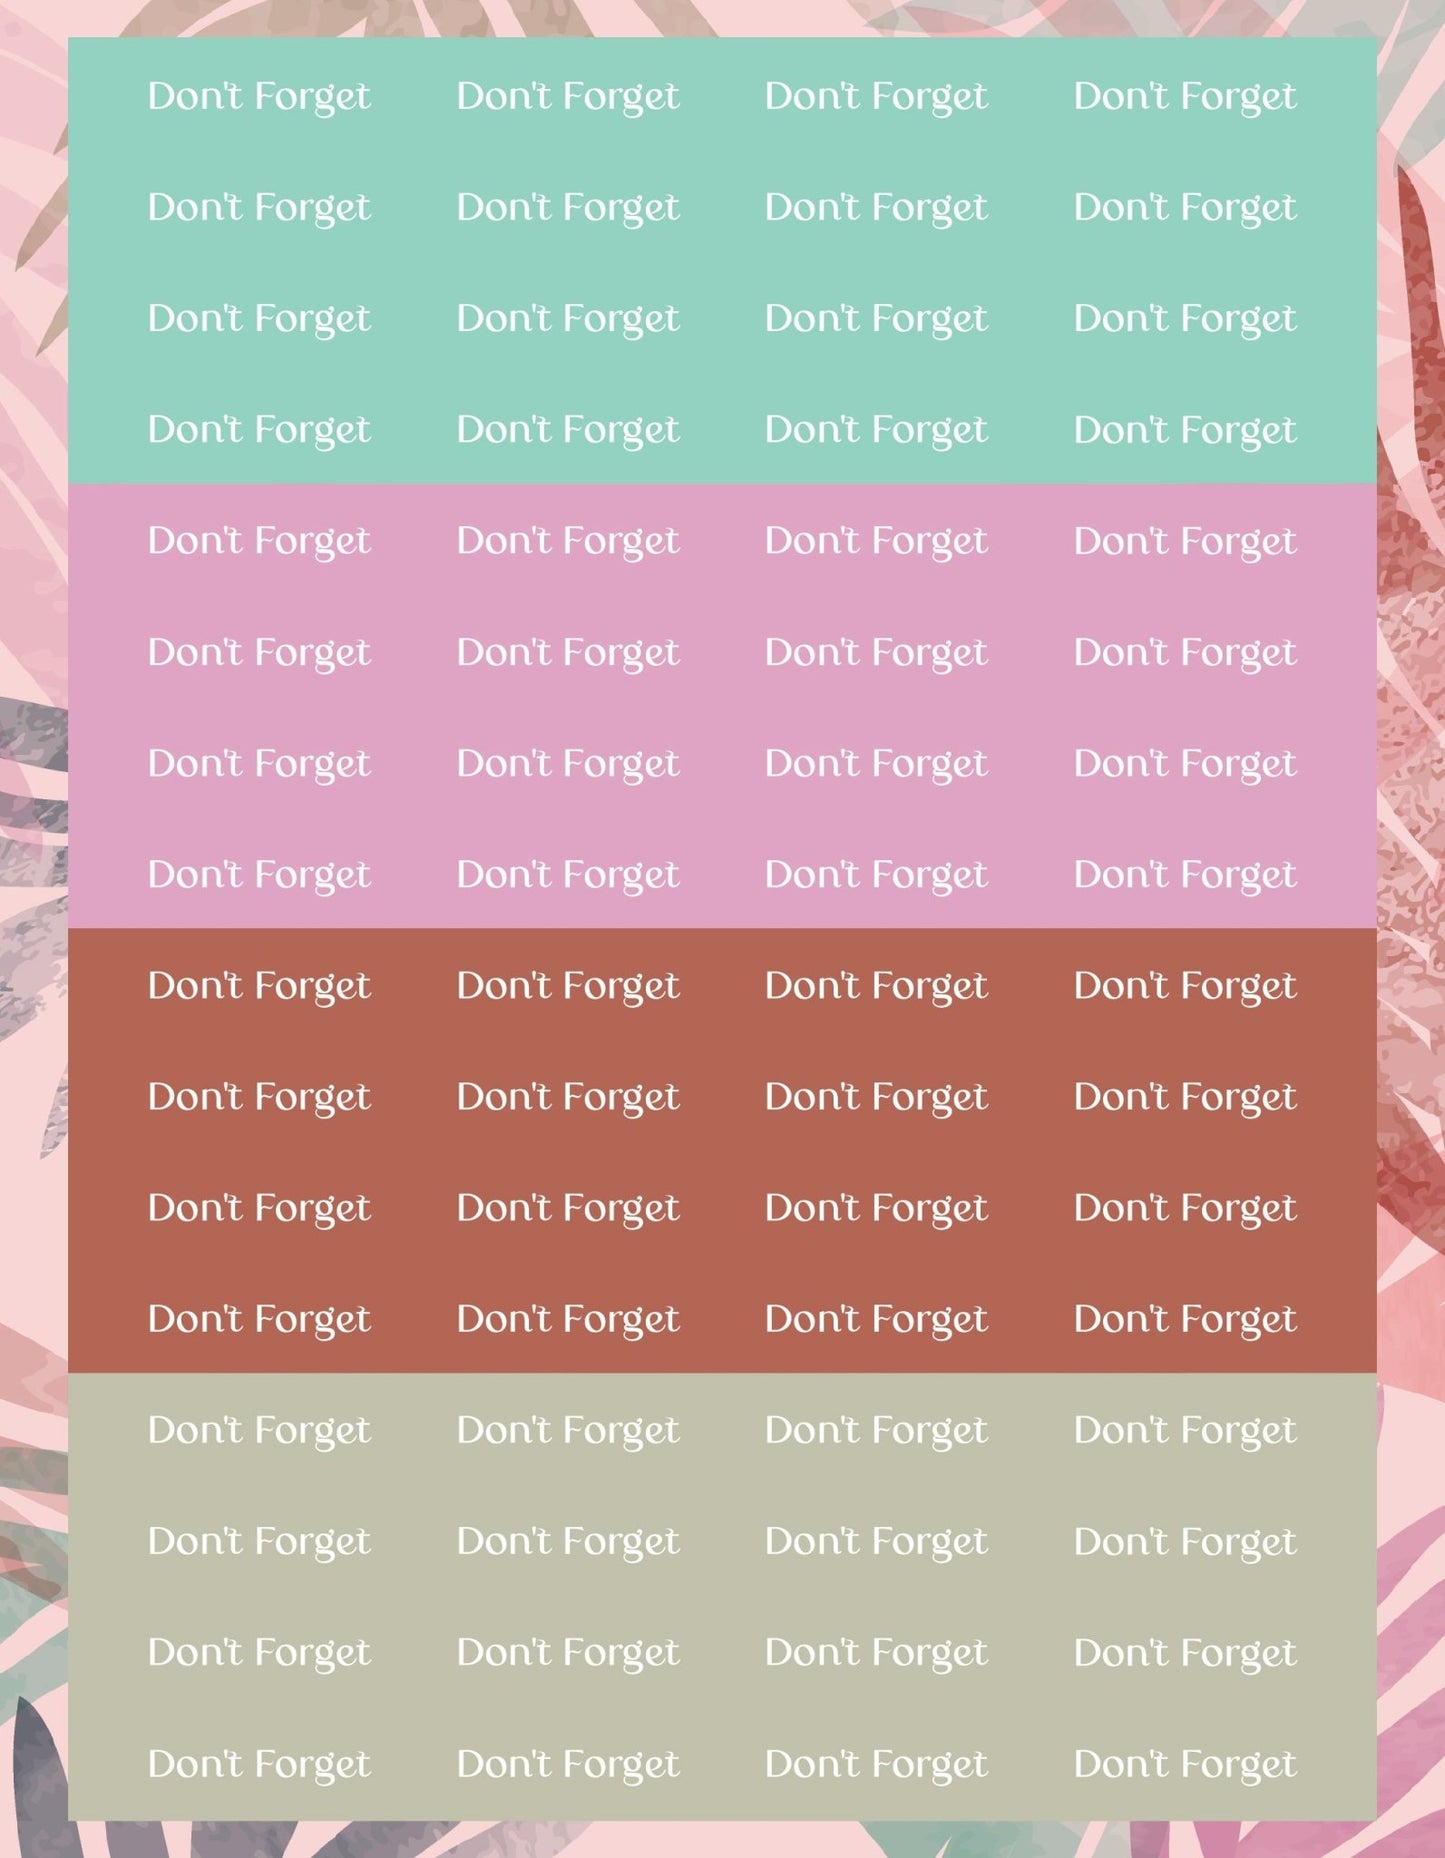 Don't Forget Sticker Sheets - 9 Designs/Colors - Colibri Paper Co